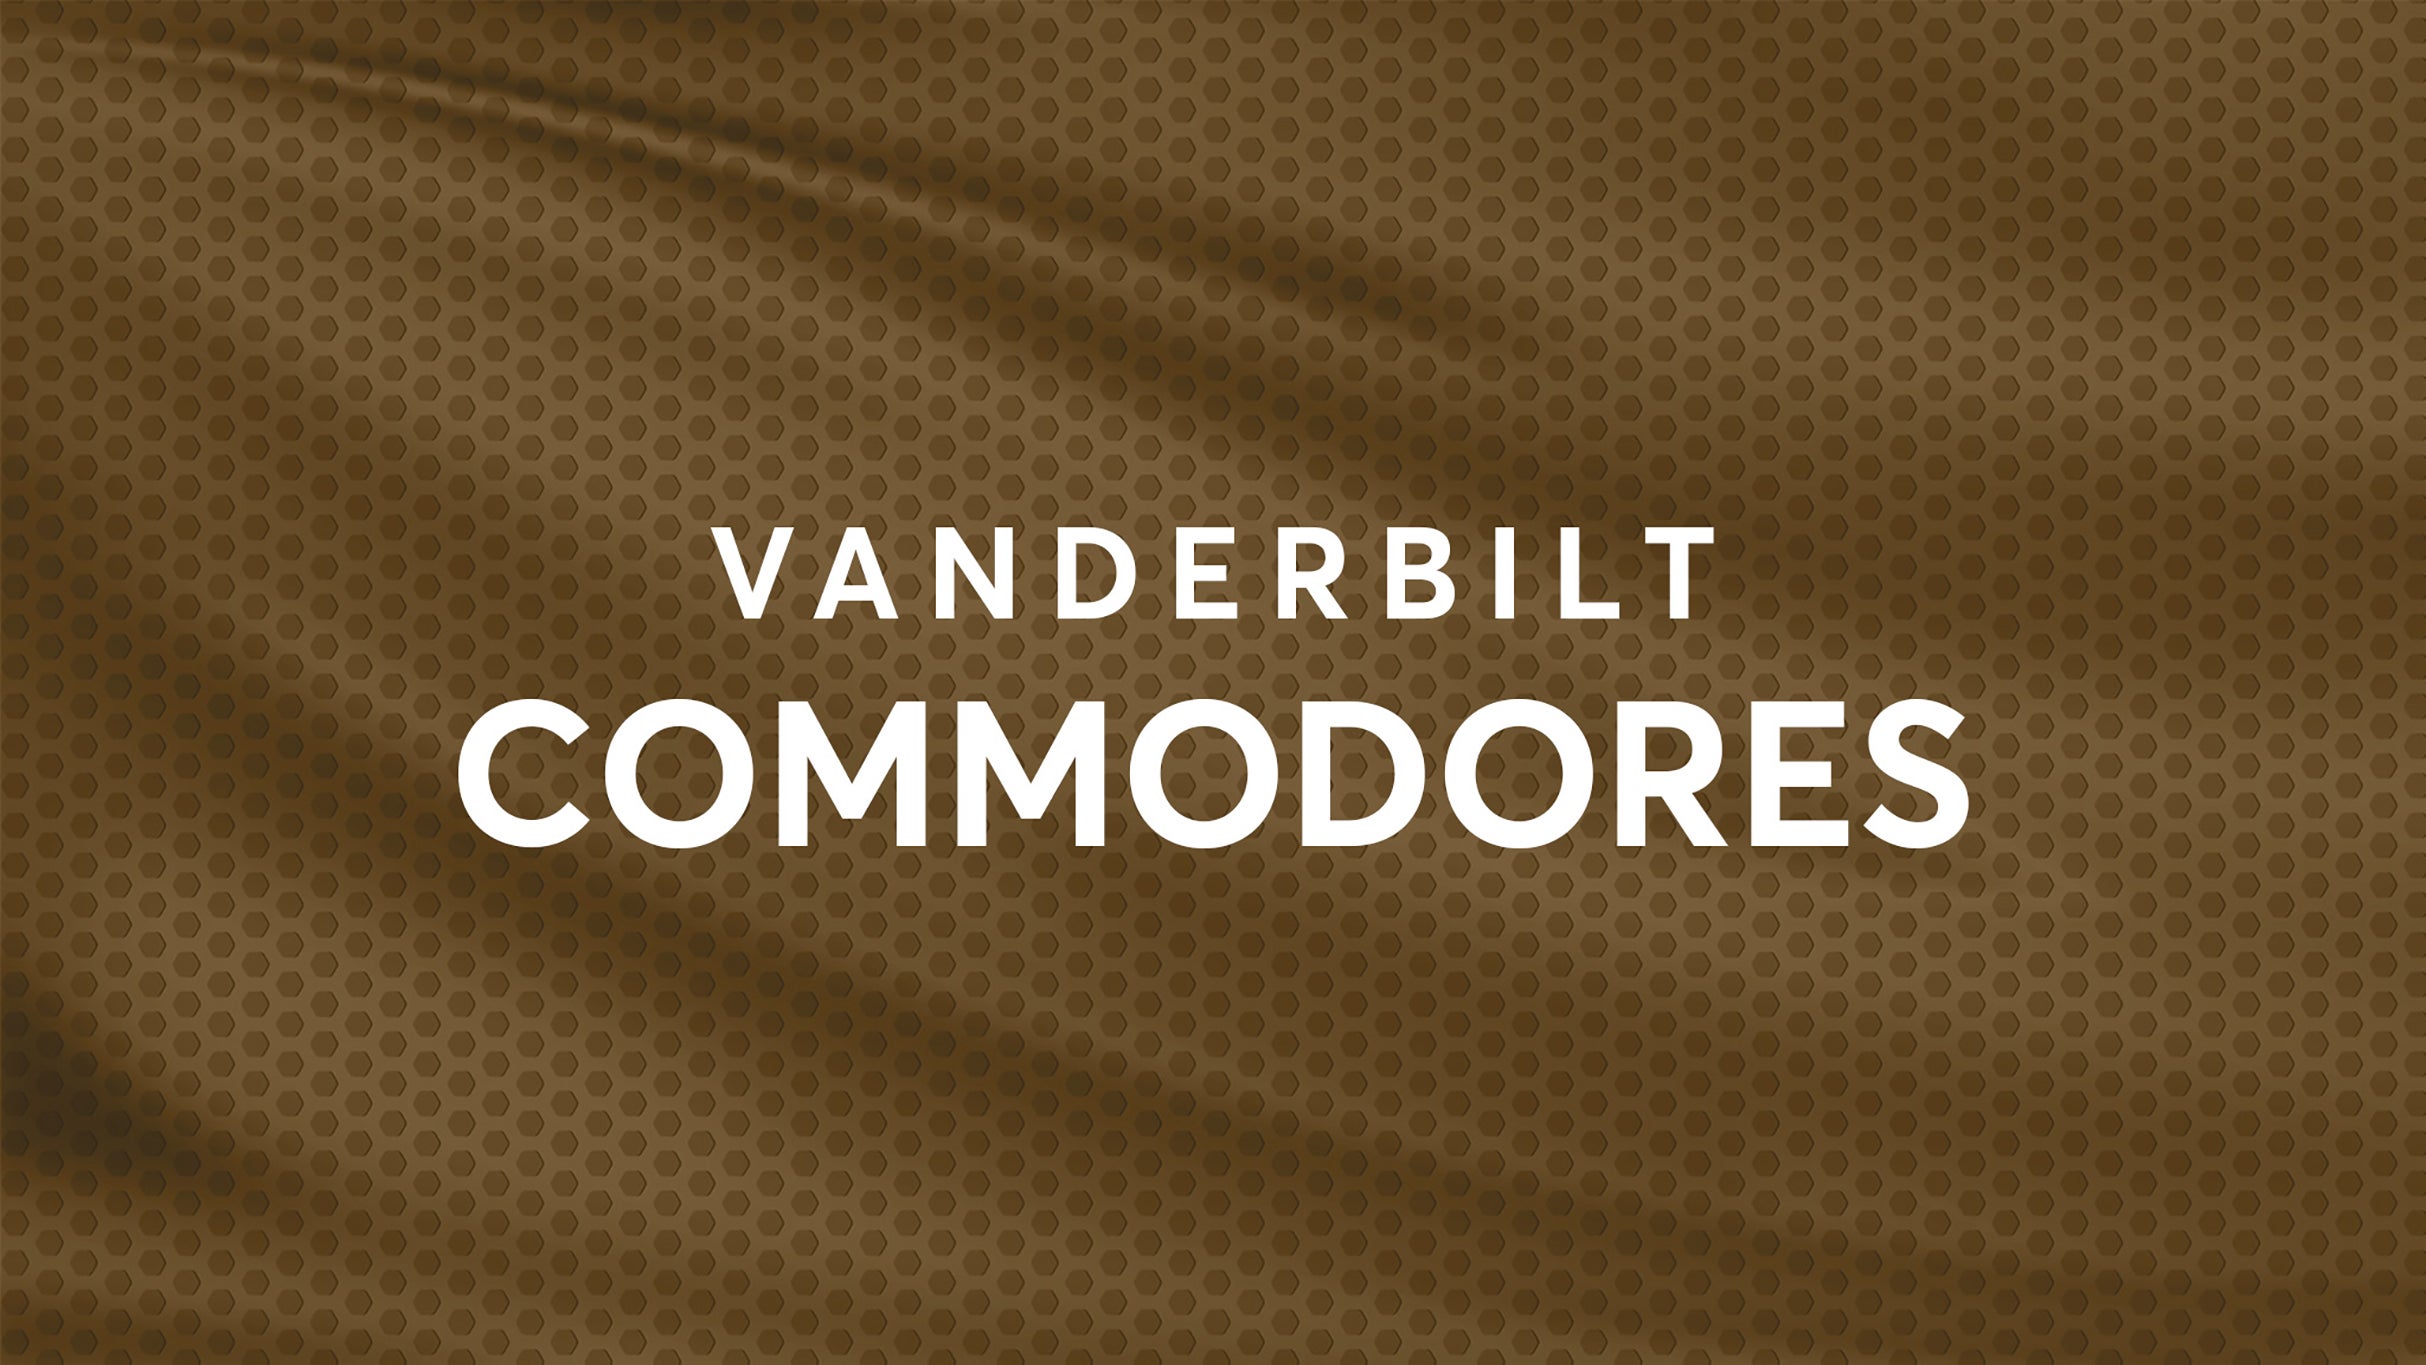 Vanderbilt Commodores Football vs. Alabama Crimson Tide Football hero